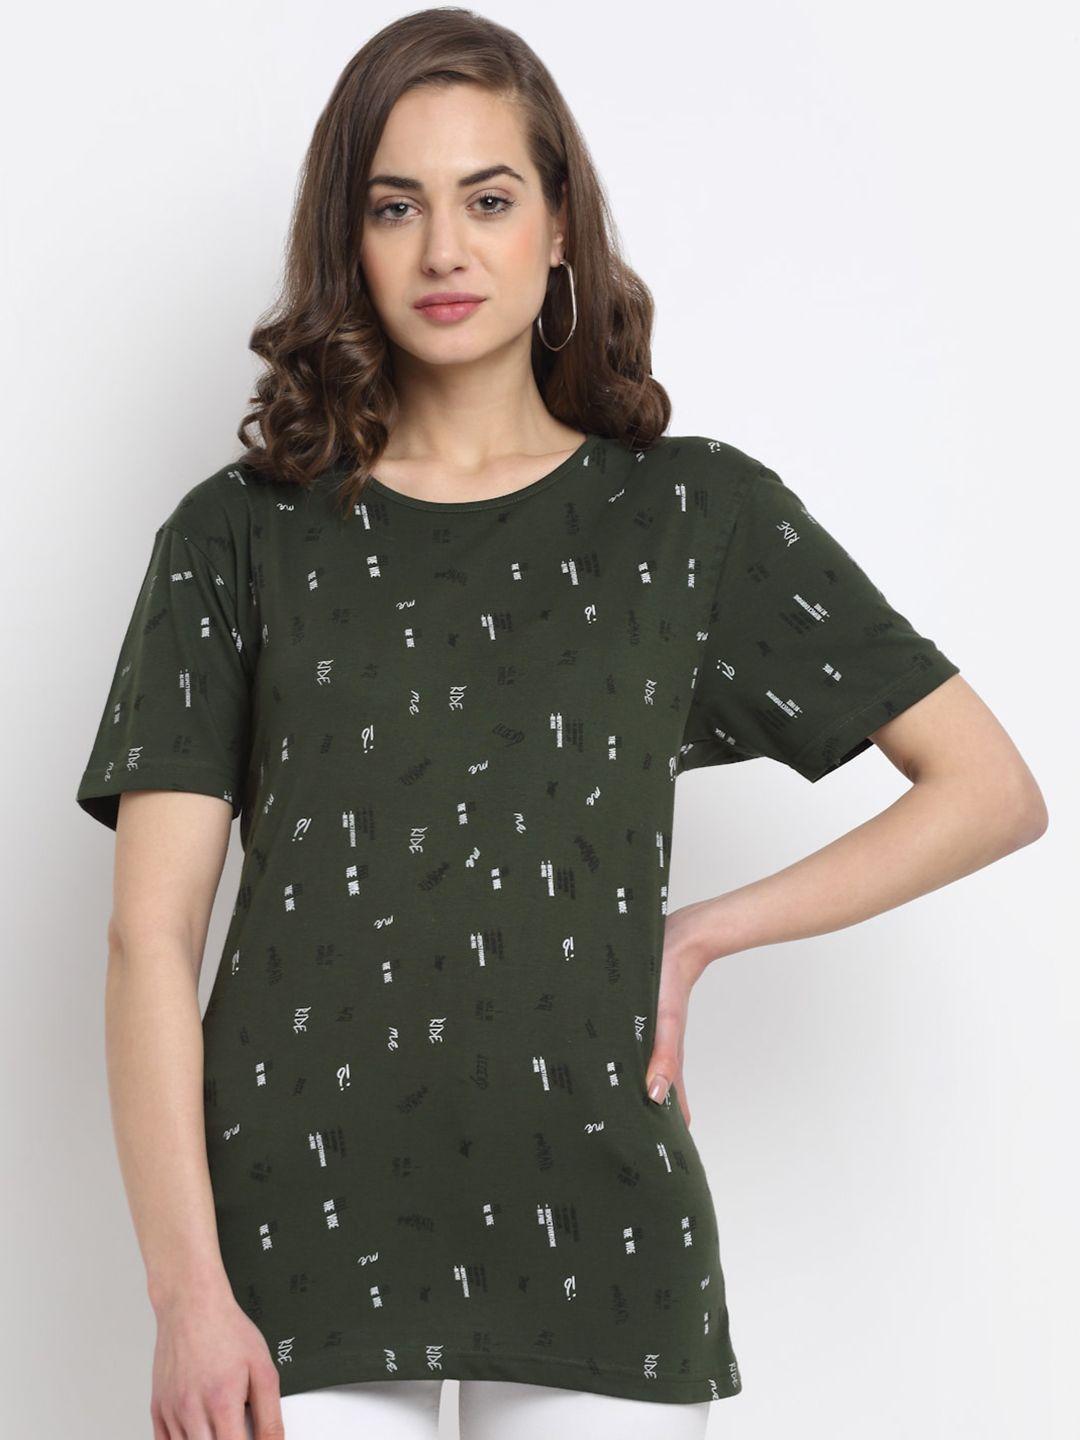 vimal-jonney-women-olive-green-printed-t-shirt